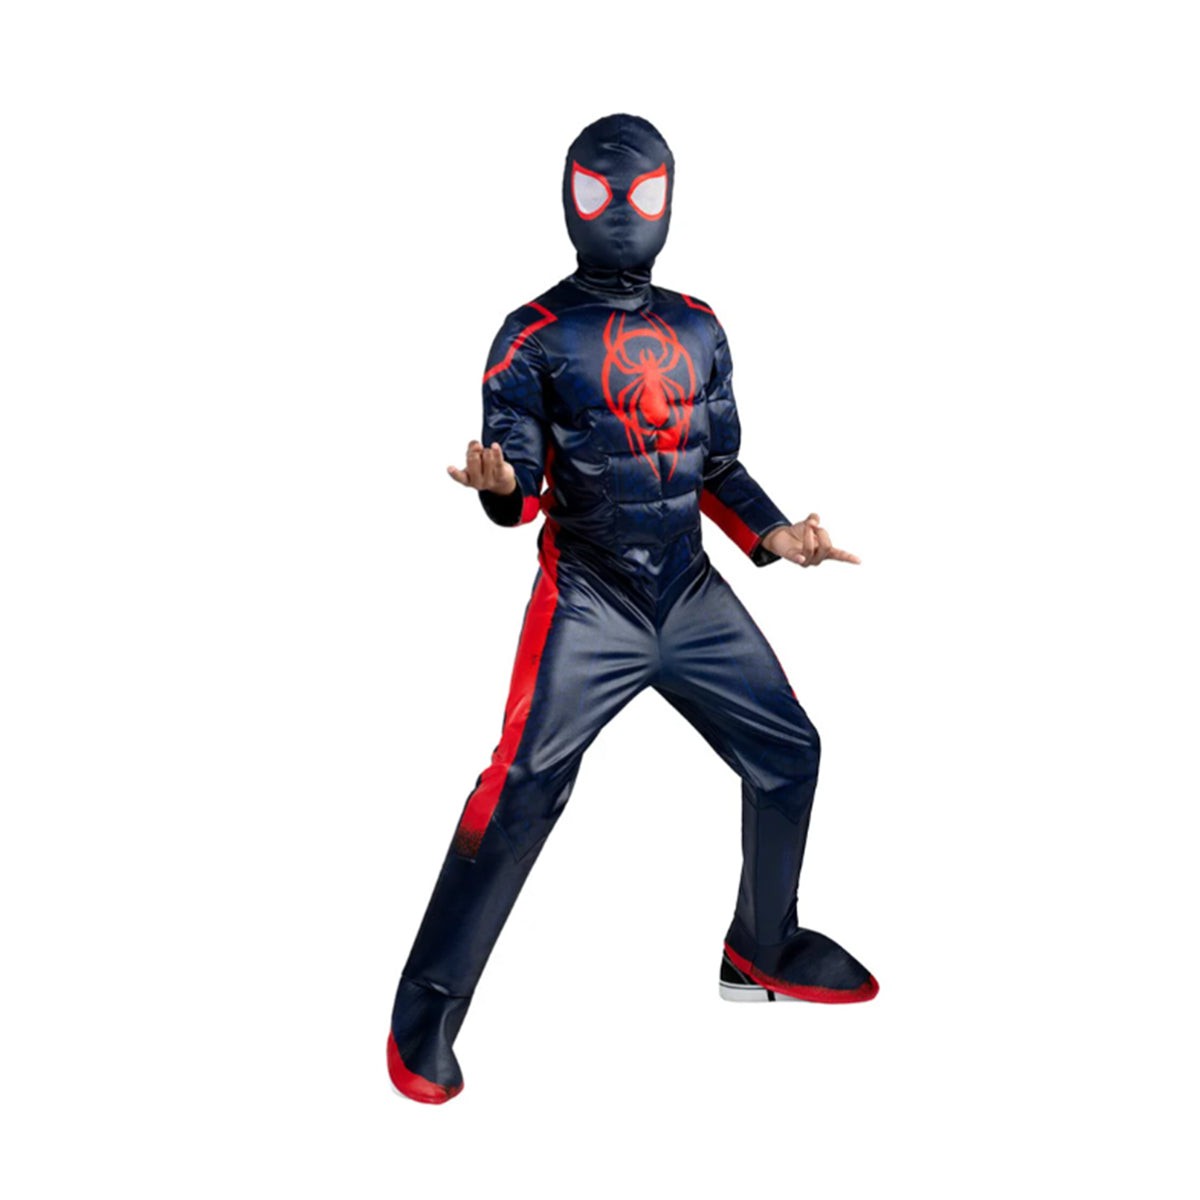 KROEGER Costumes Marvel Spider-Man Miles Morales Costume for Kids, Black and Red Padded Jumpsuit